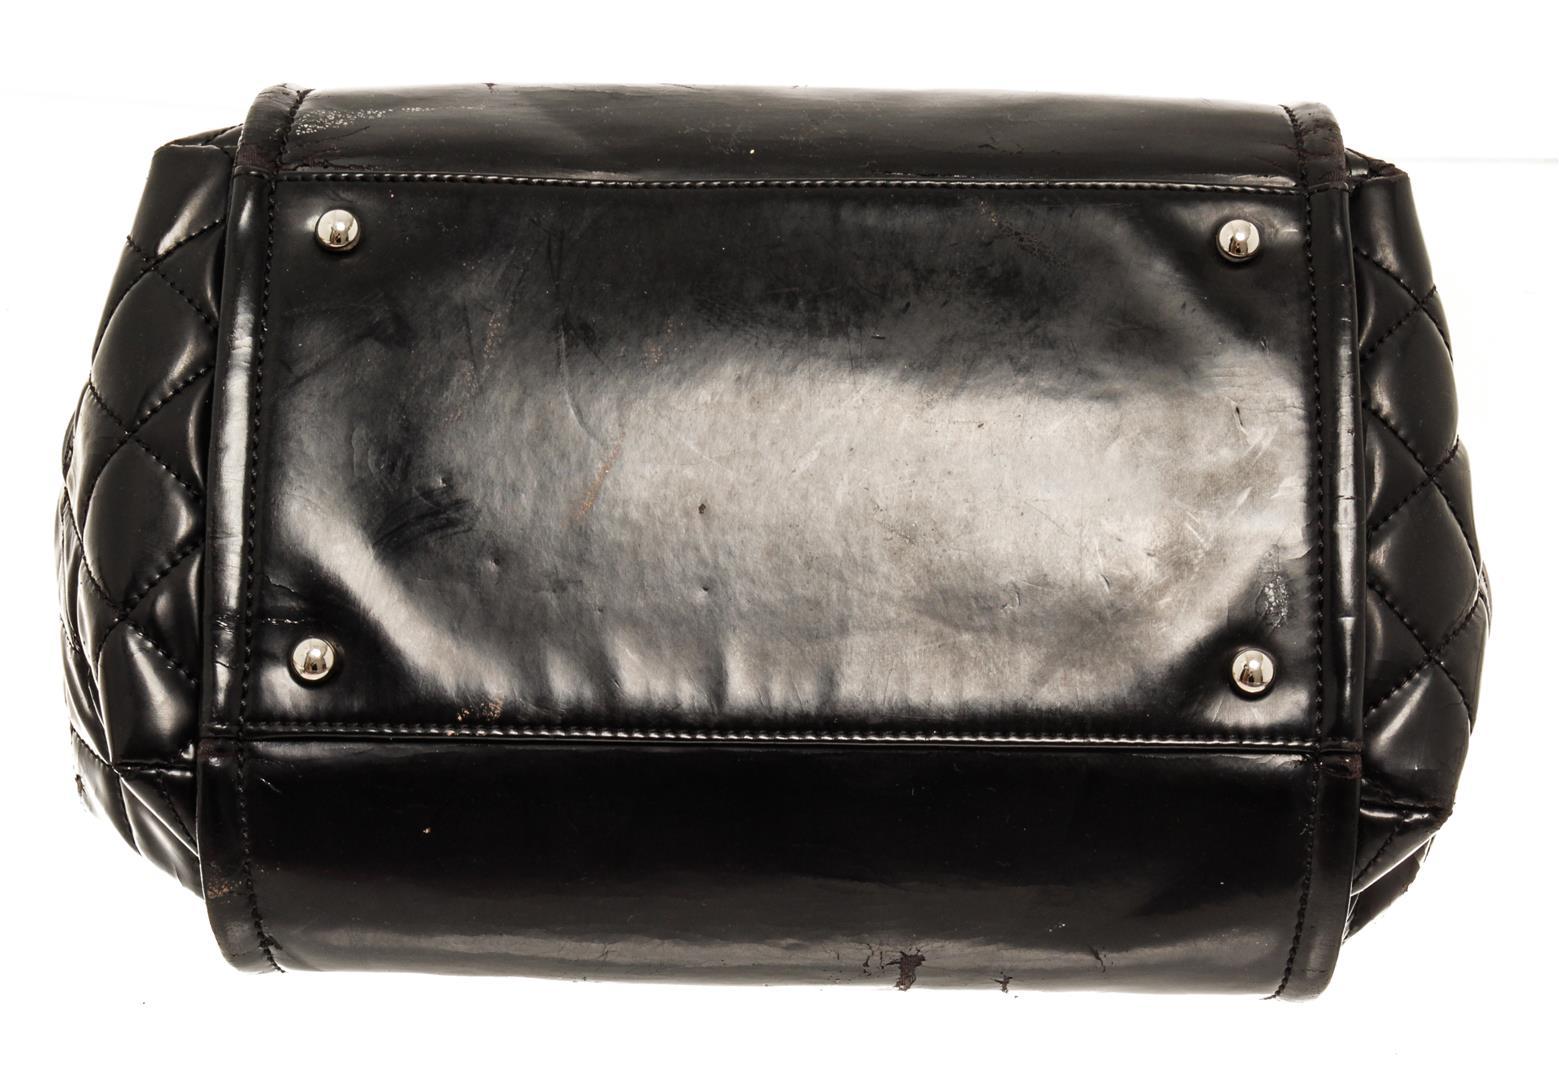 Chanel Black Leather CC Bowler Bag